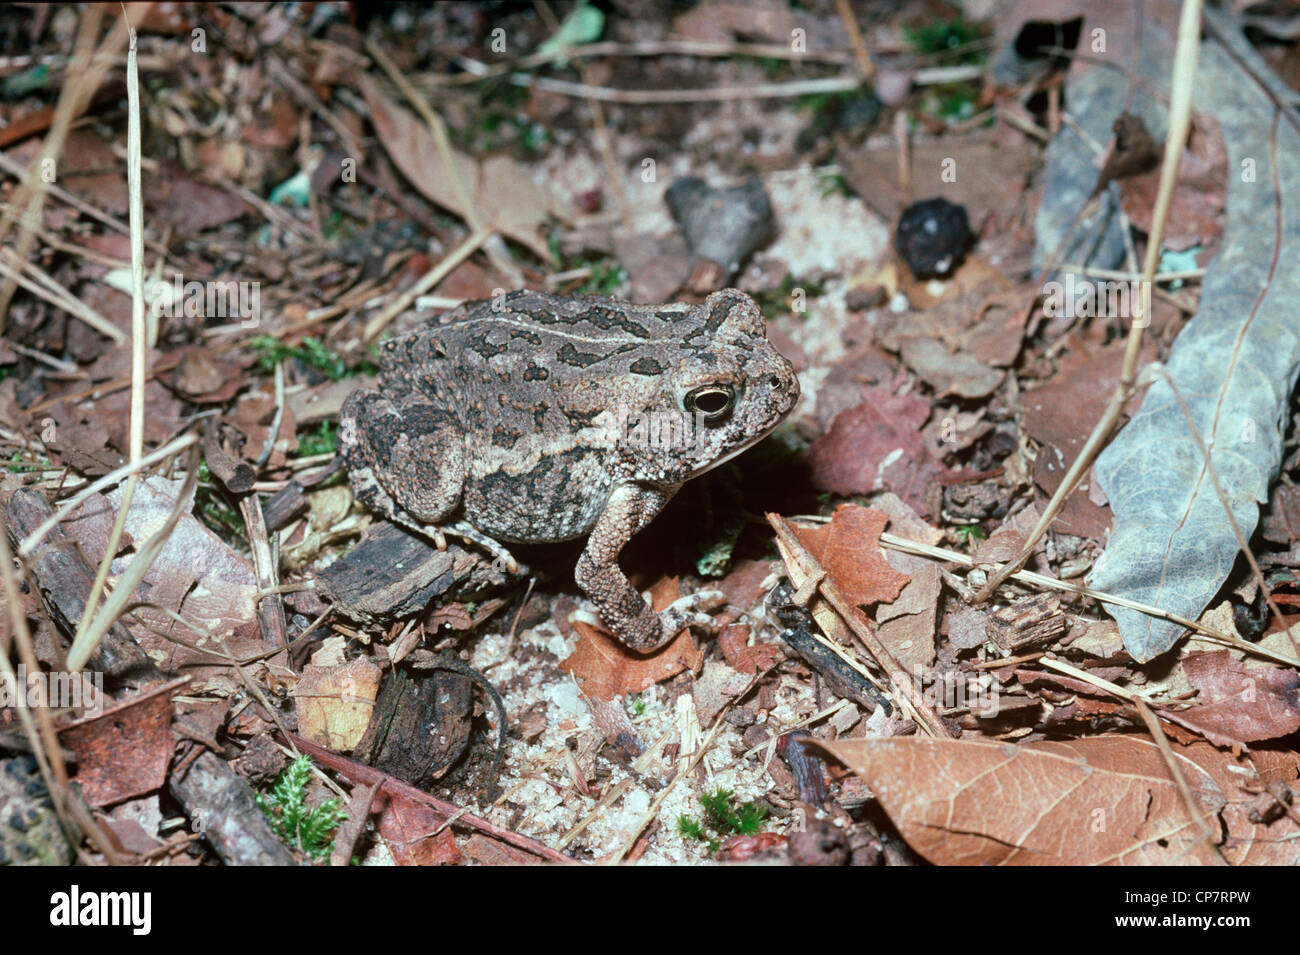 Le crapaud de fowler (Bufo woodhousii fowleri : Bufonidae) dans la région de Woodland, S. Carolina USA Banque D'Images